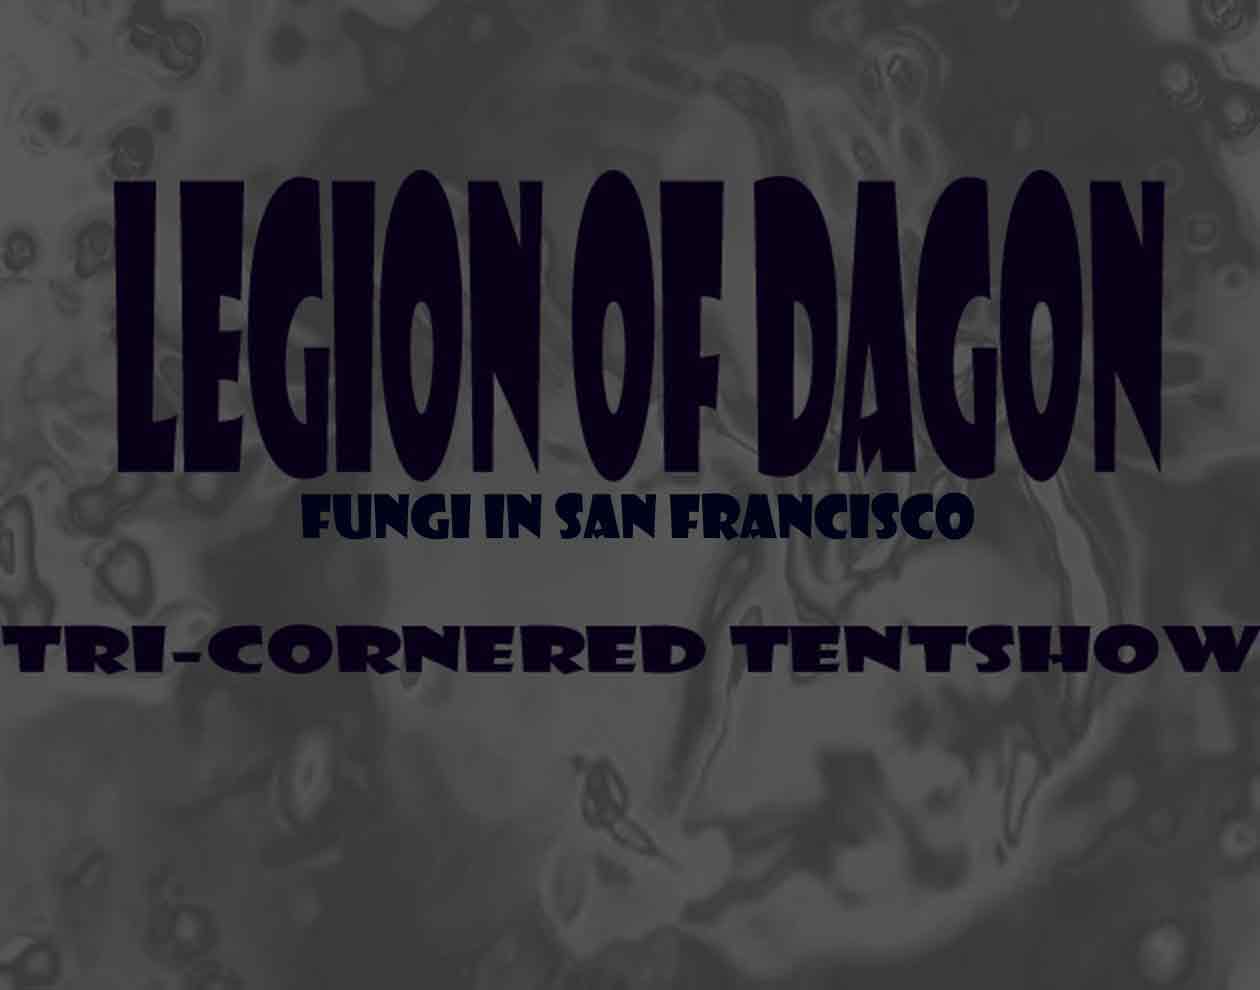 Tri-Cornered Tent Show, Legion of Dagon